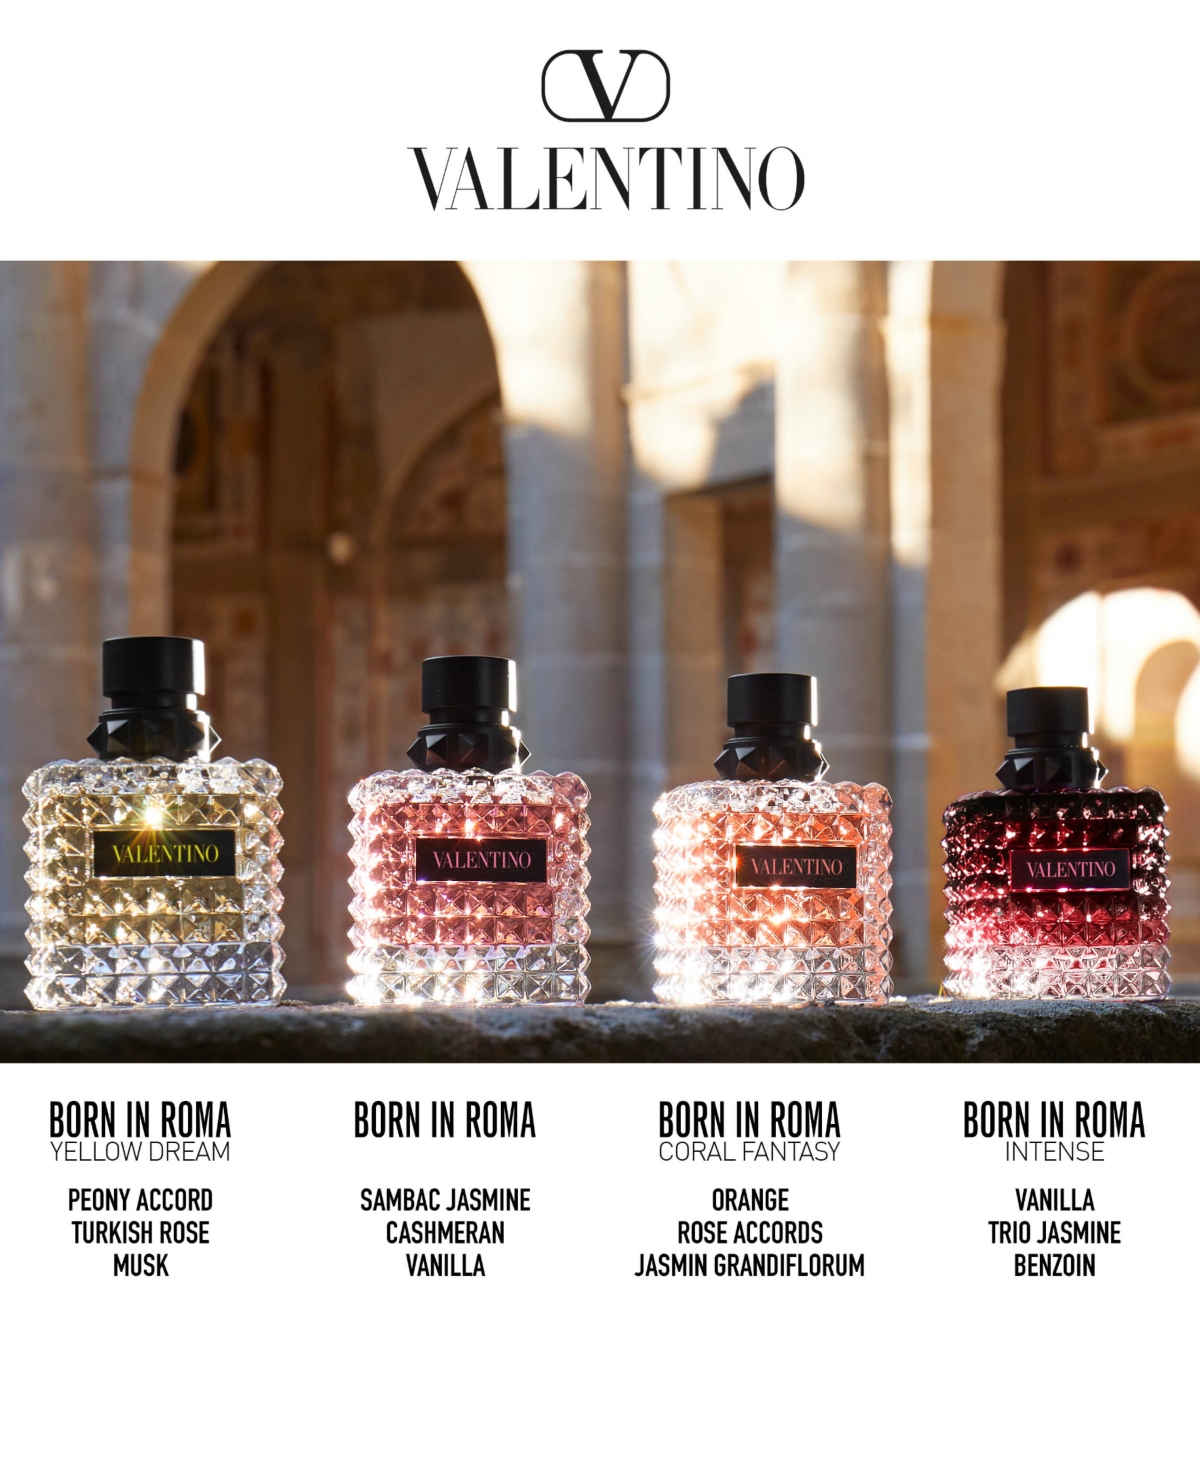 Shop Valentino Donna Born In Roma Intense Eau De Parfum, 1 Oz. In No Color